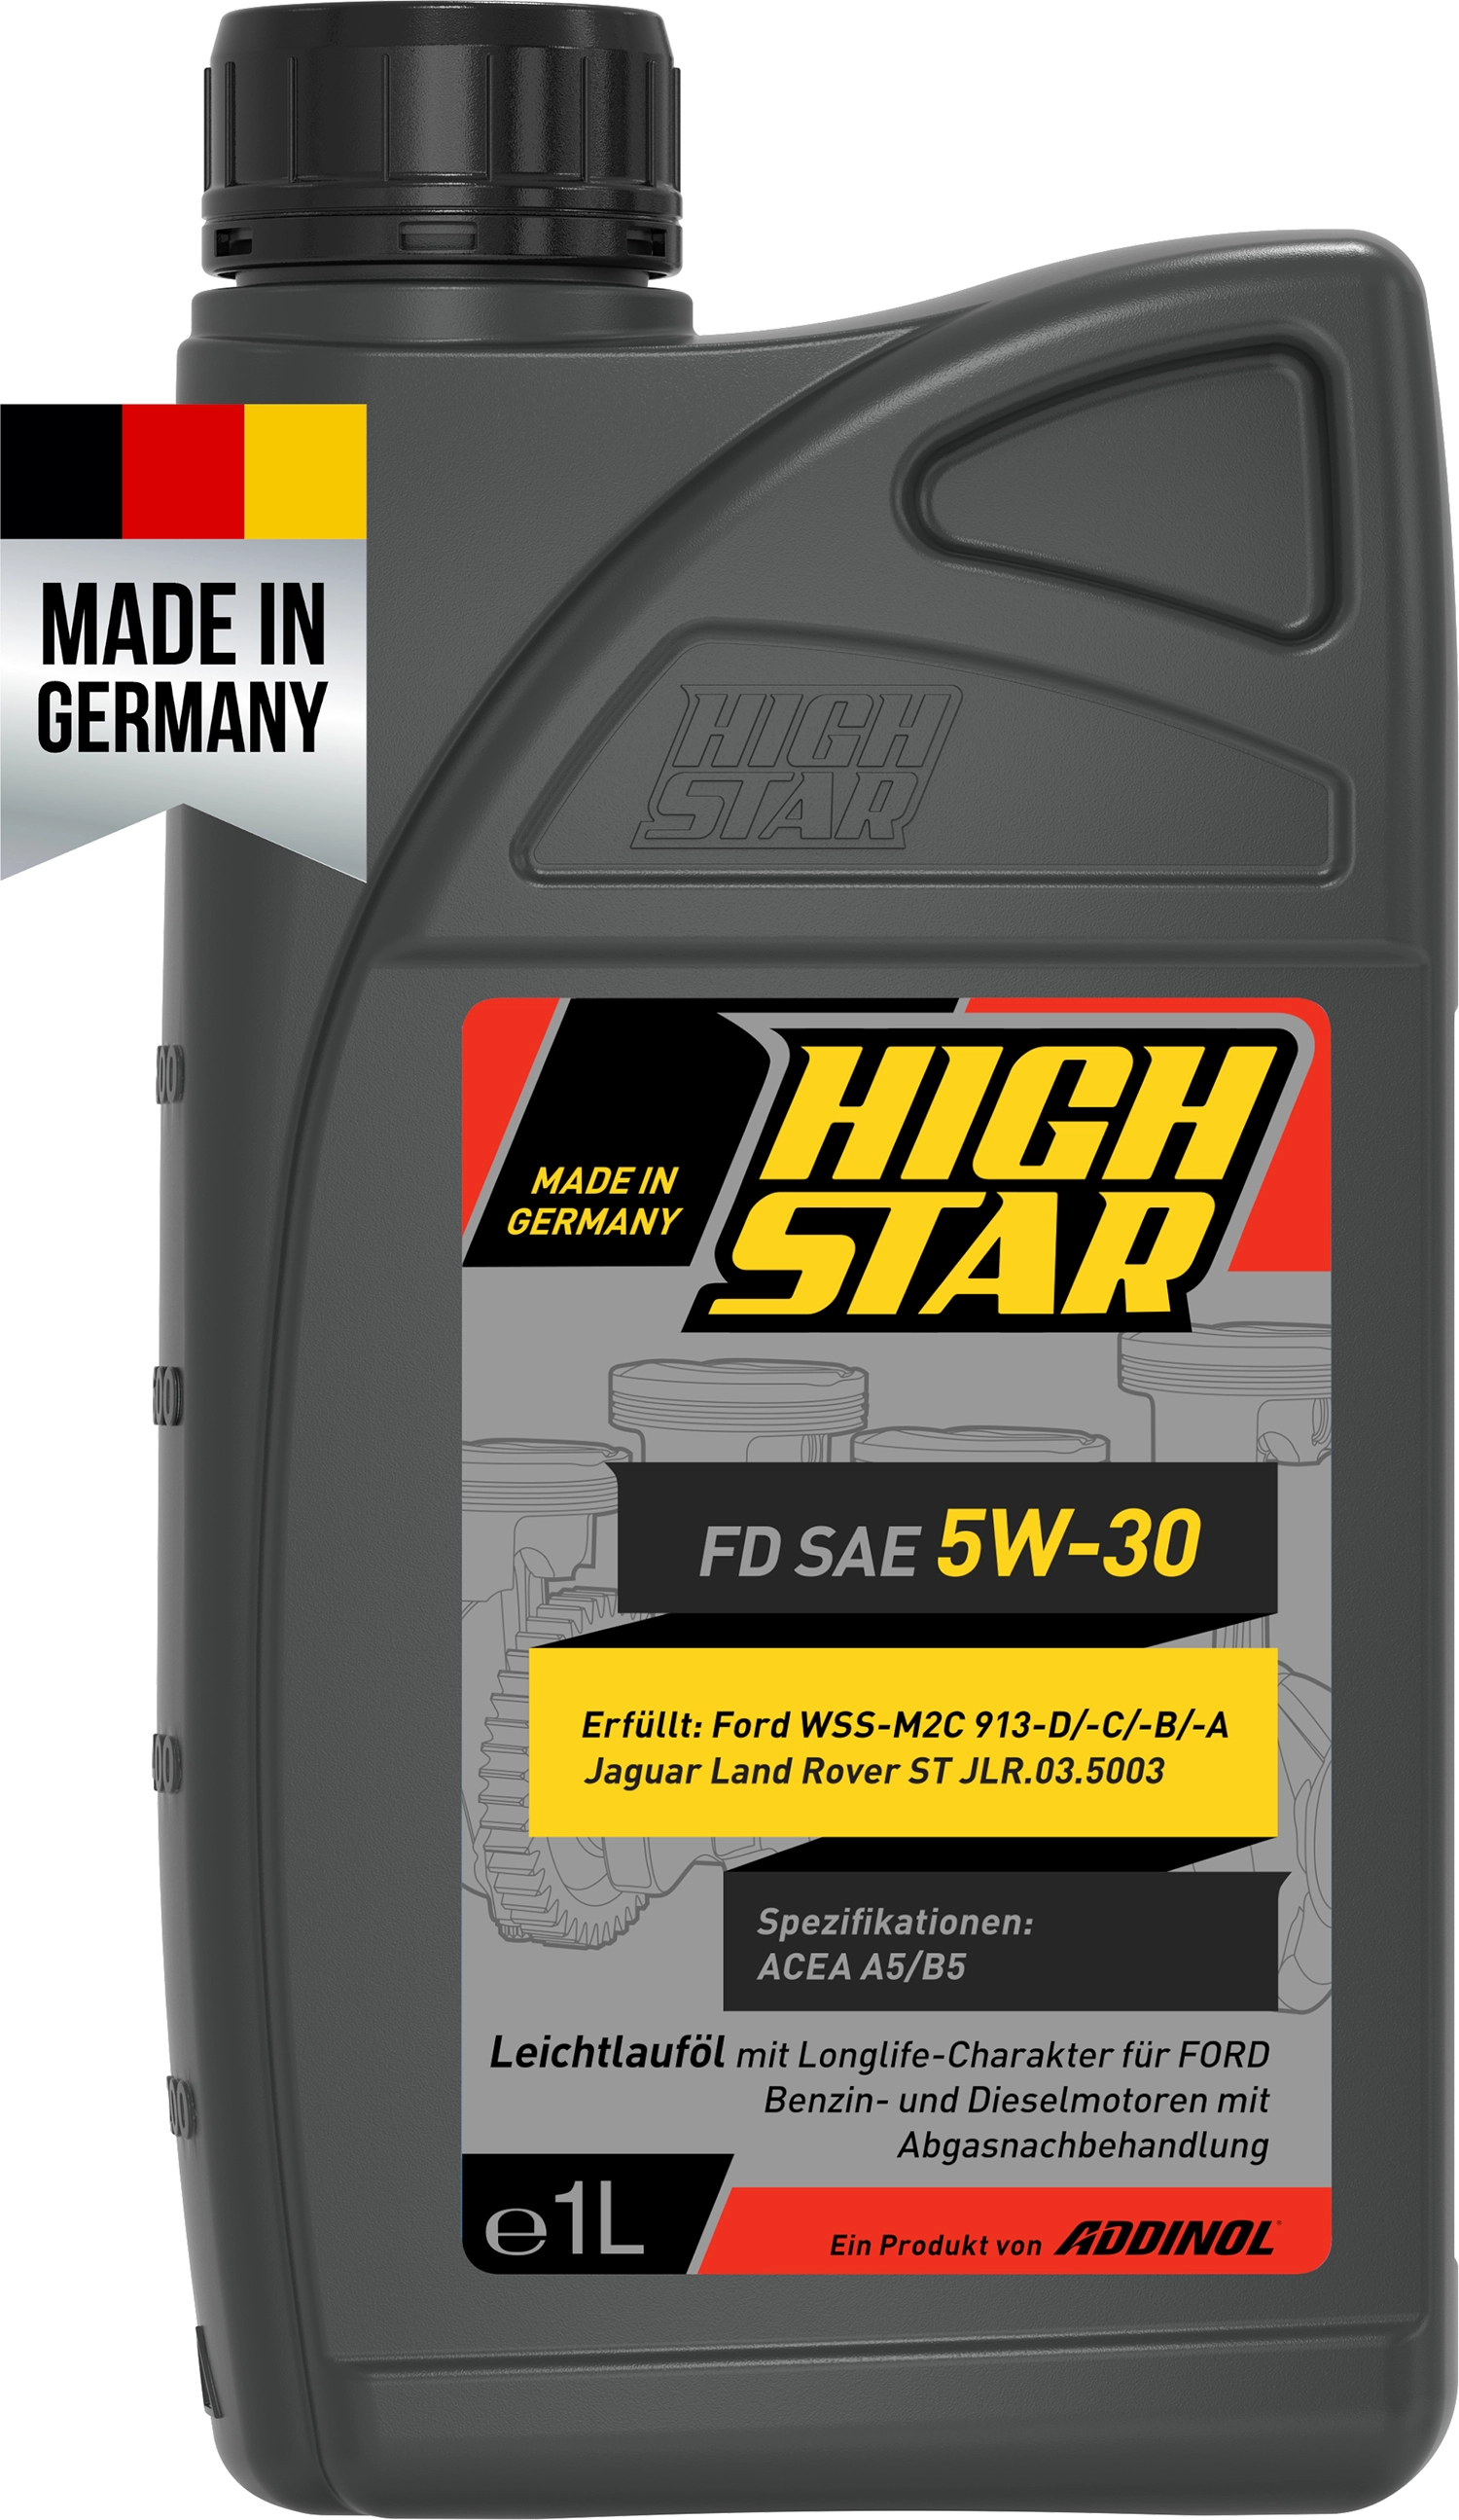 High Star FD SAE 5W-30 1 l Motoröl kaufen bei OBI